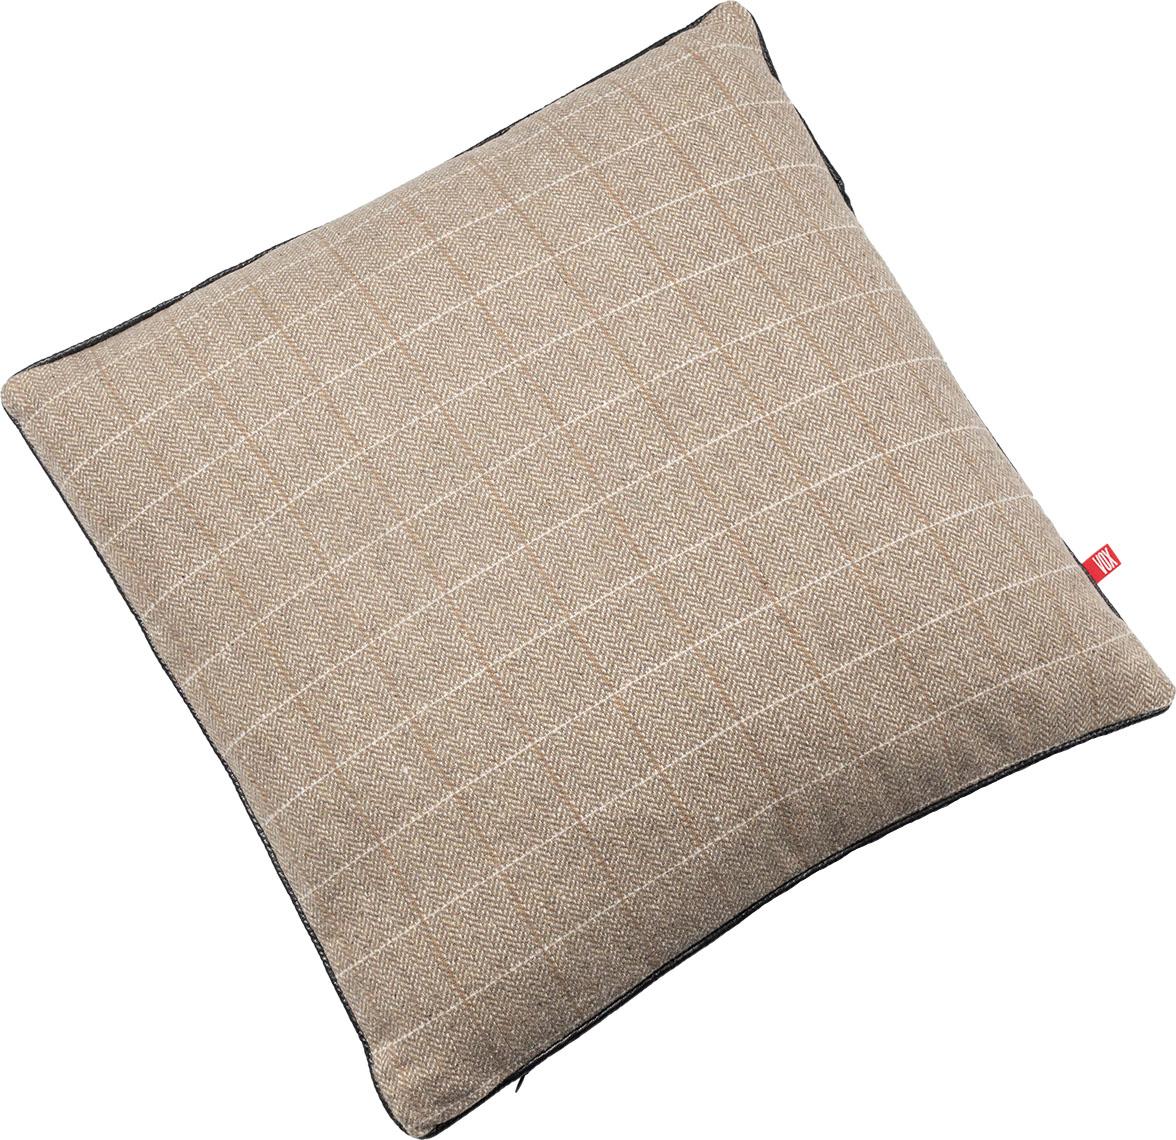 Small square pillow Etris